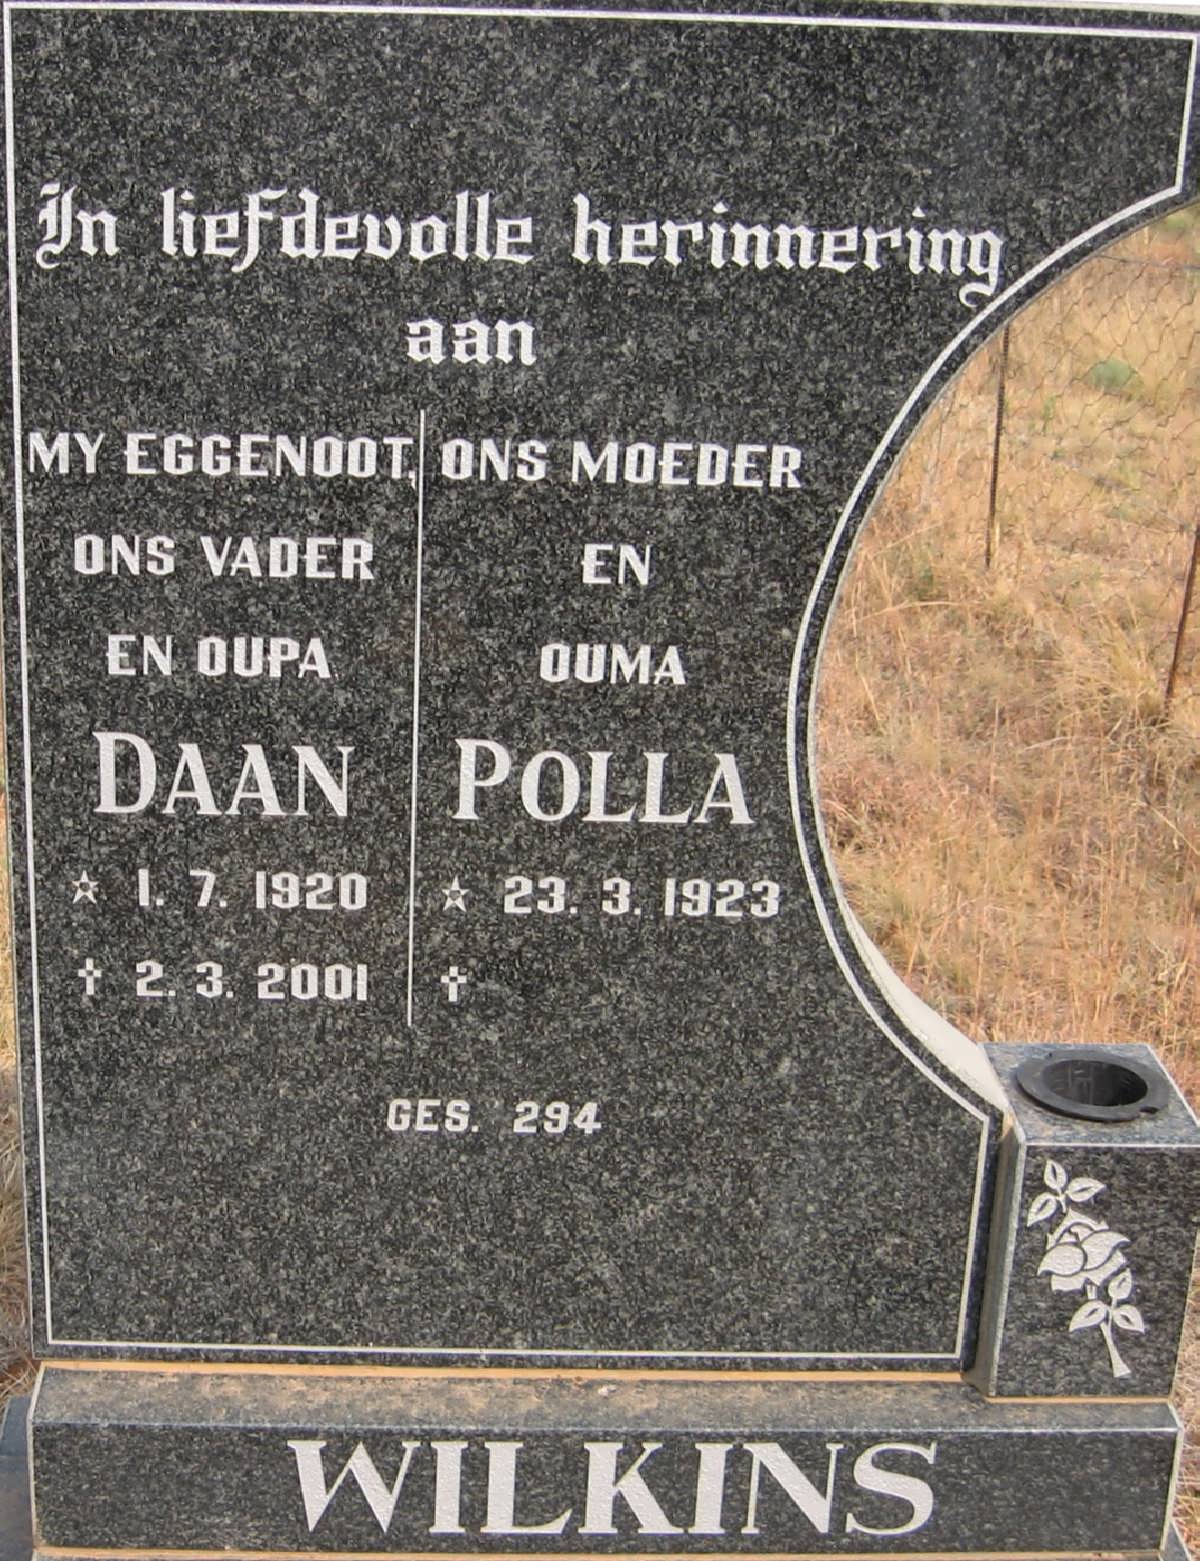 WILKINS Daan 1920-2001 & Polla 1923-